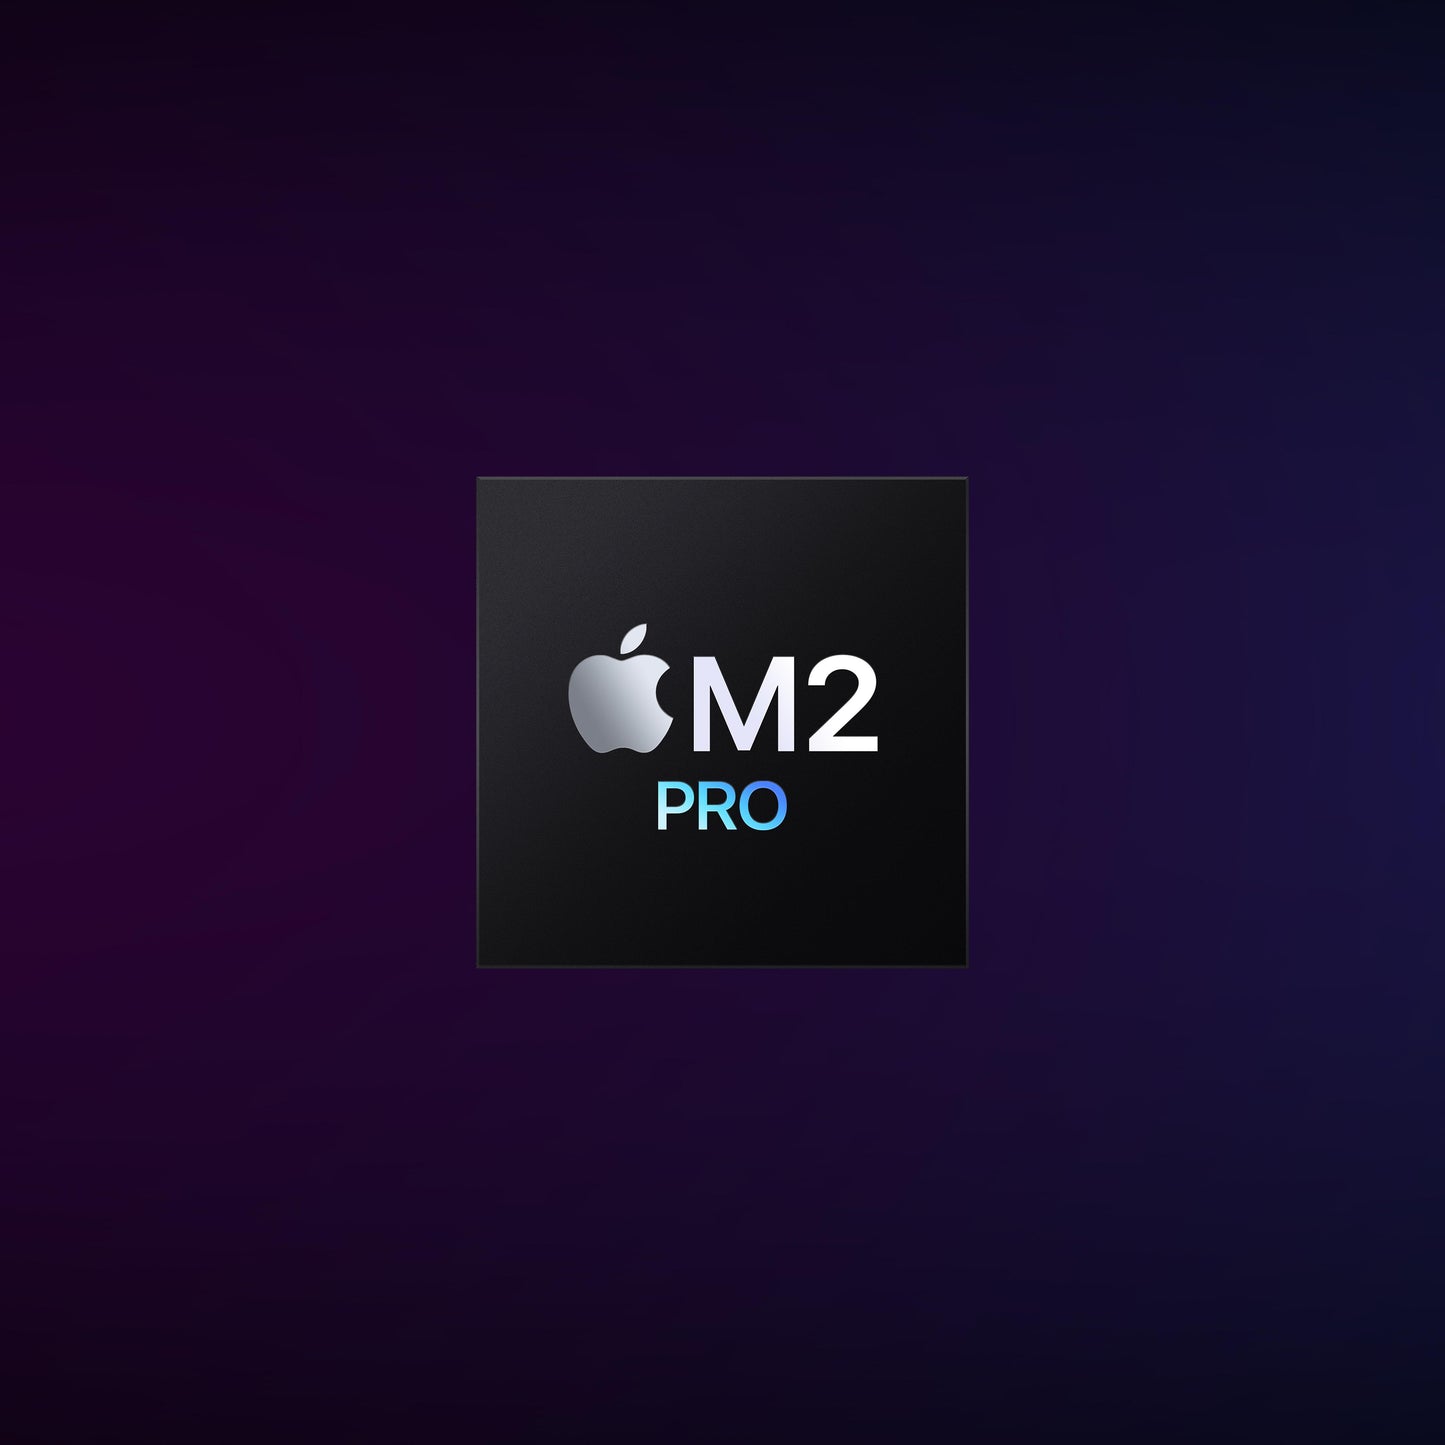 Mac mini: Apple M2 Pro chip with 10‑core CPU and 16‑core GPU, 512GB SSD - Silver